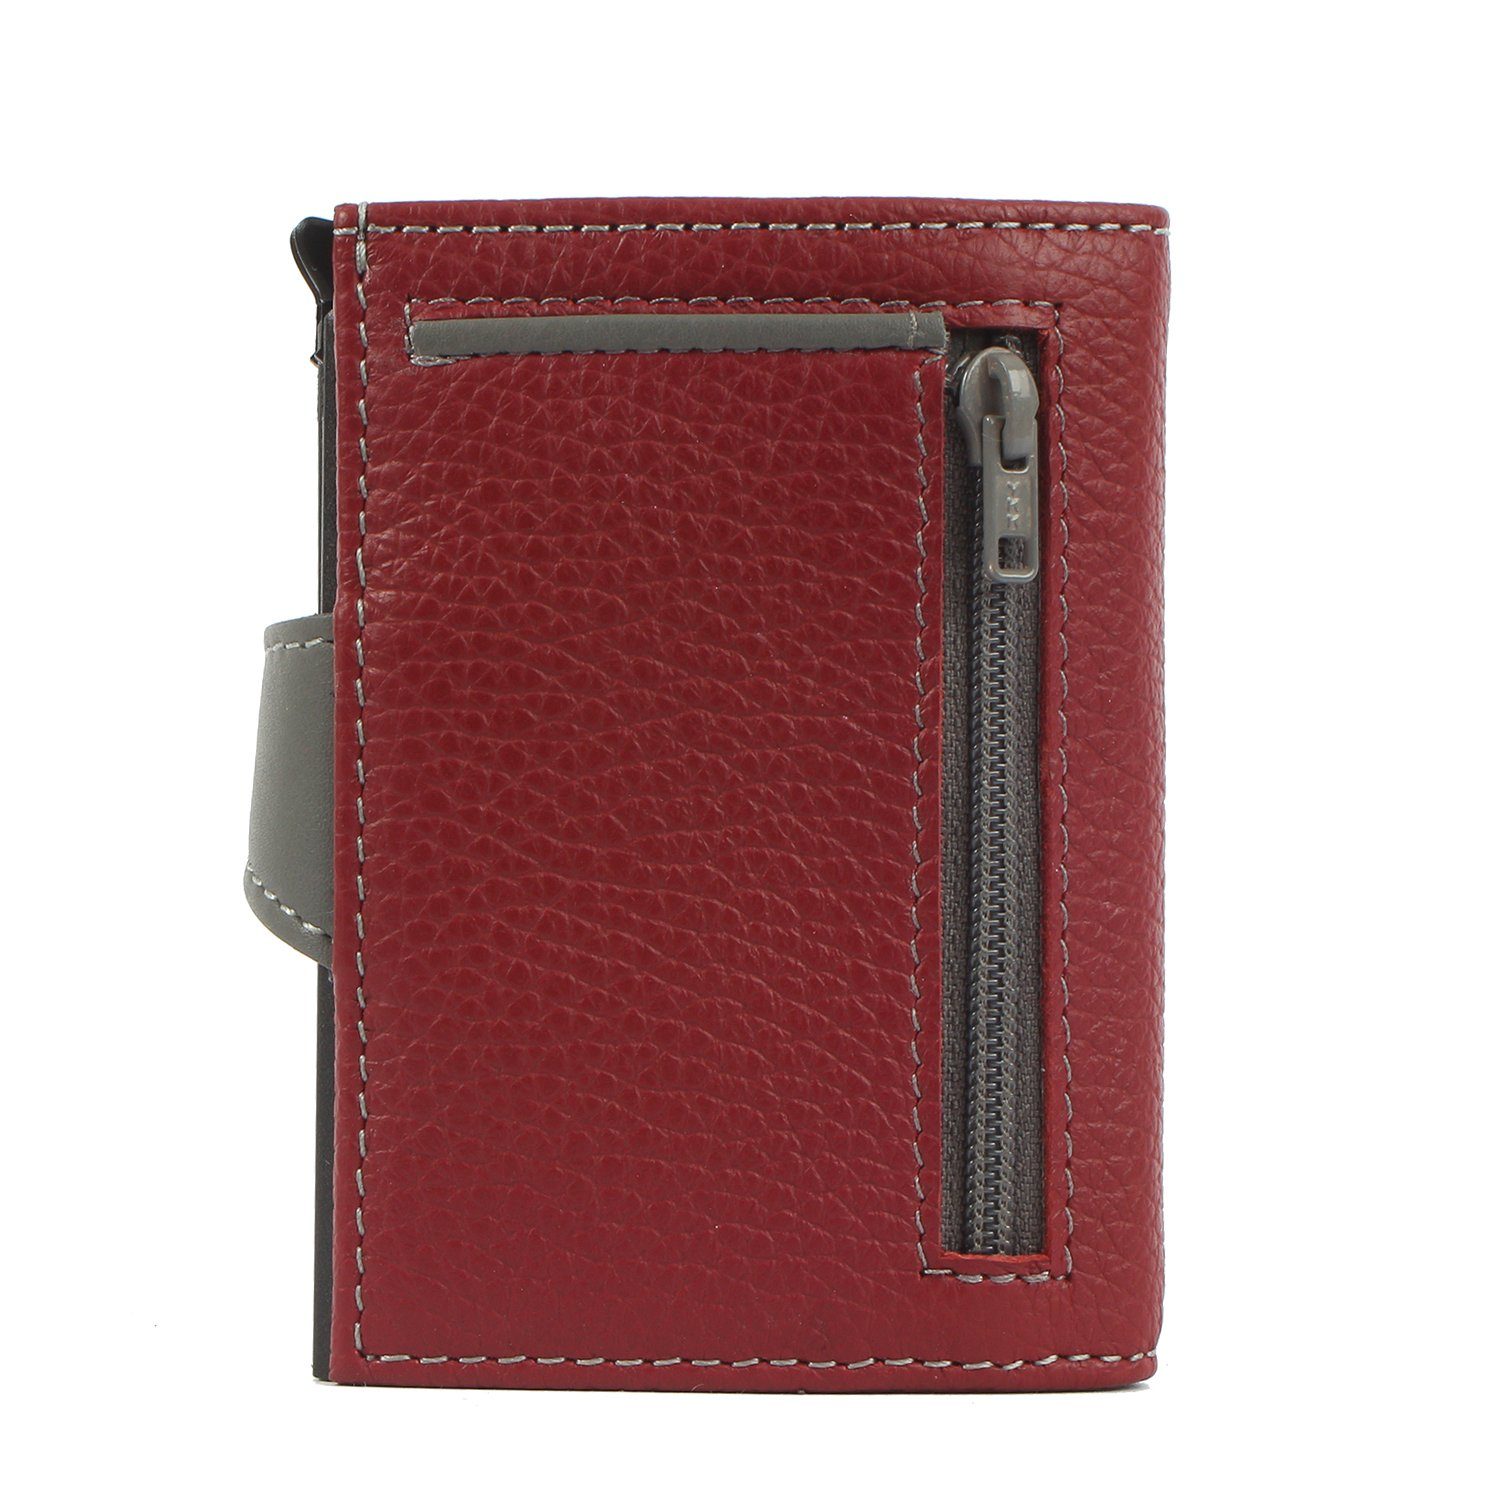 Margelisch Mini leather, noonyu karminrot Geldbörse double RFID Leder Upcycling Kreditkartenbörse aus